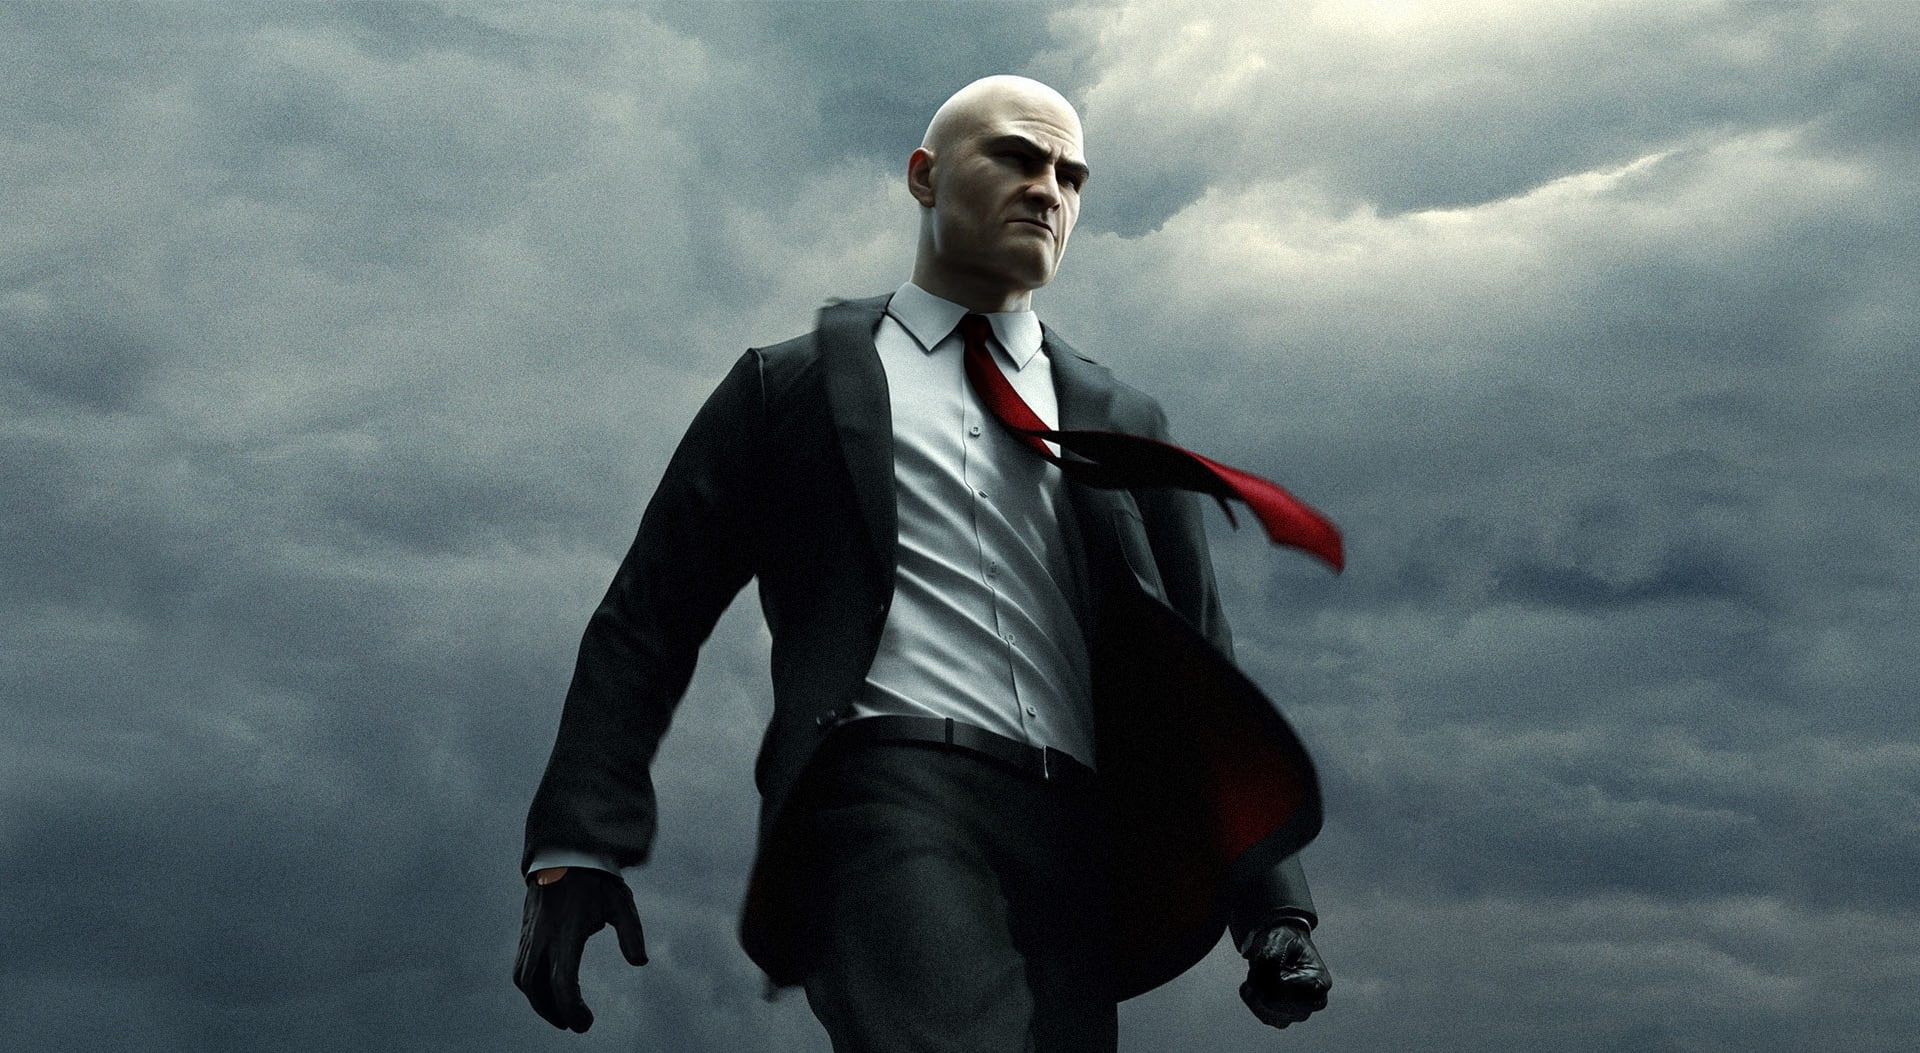 Agent 47 - Hitman: Absolution, men's black suit jacket and red necktie